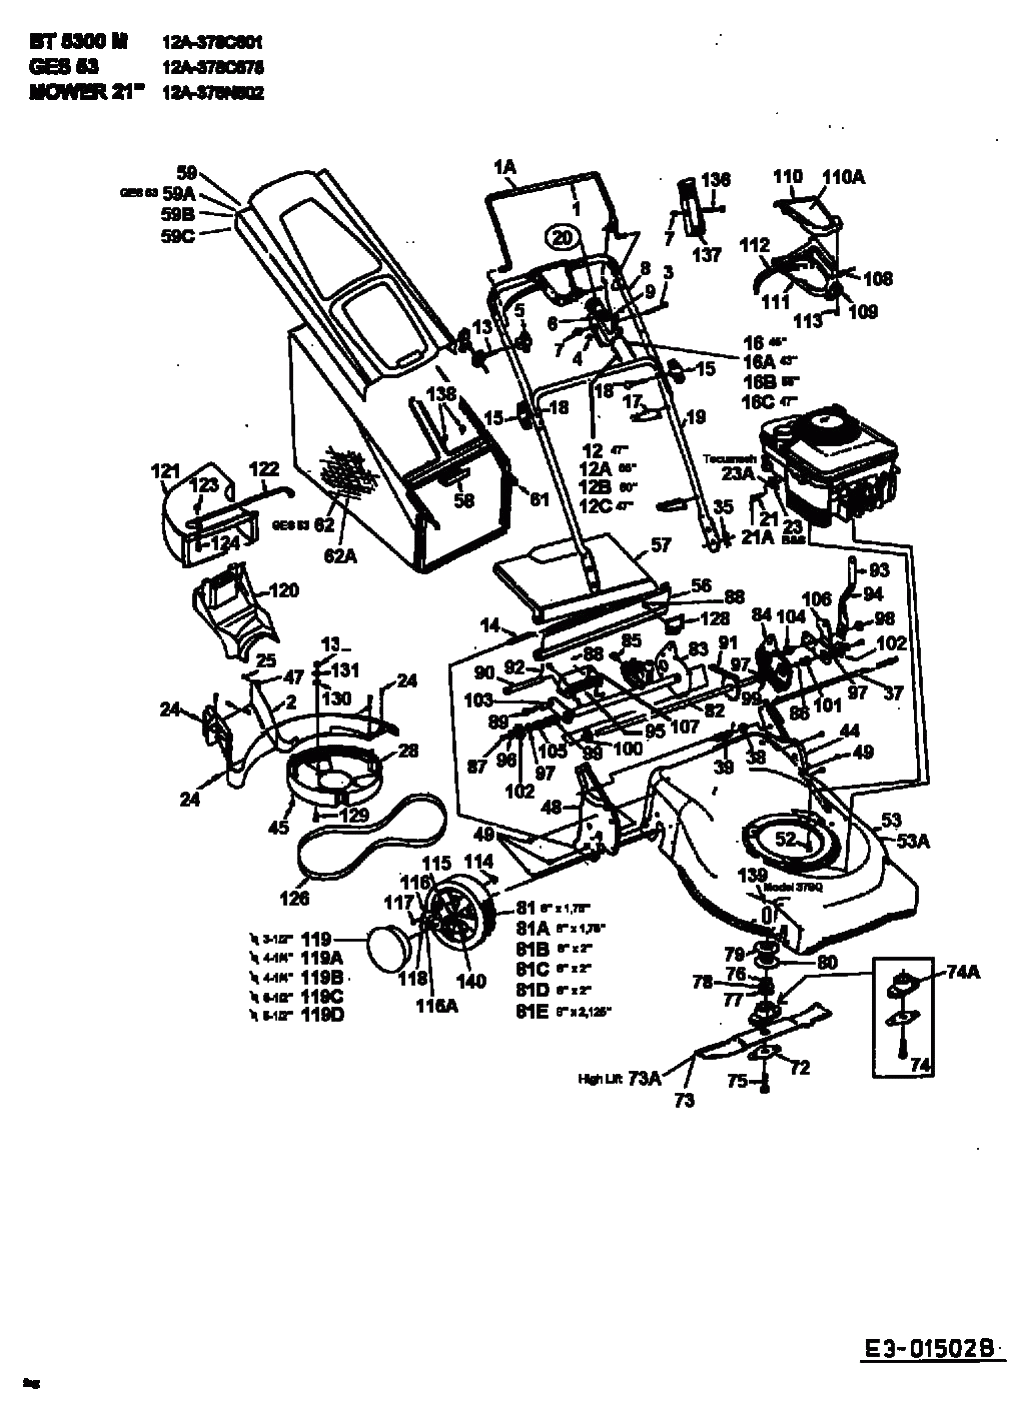 MTD Артикул 12A-378C678 (год выпуска 2000). Основная деталировка